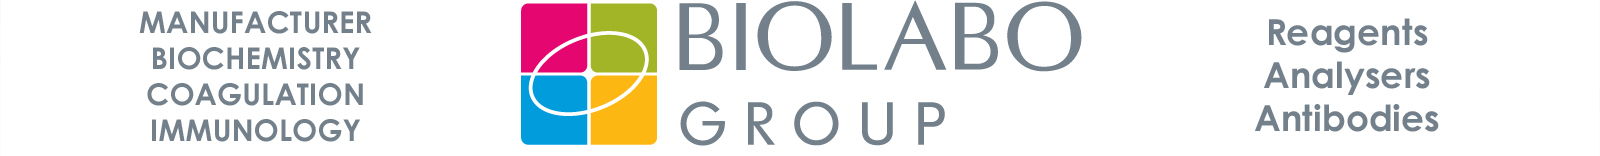 BIOLABO Group biochemistry, coagulation, immunology